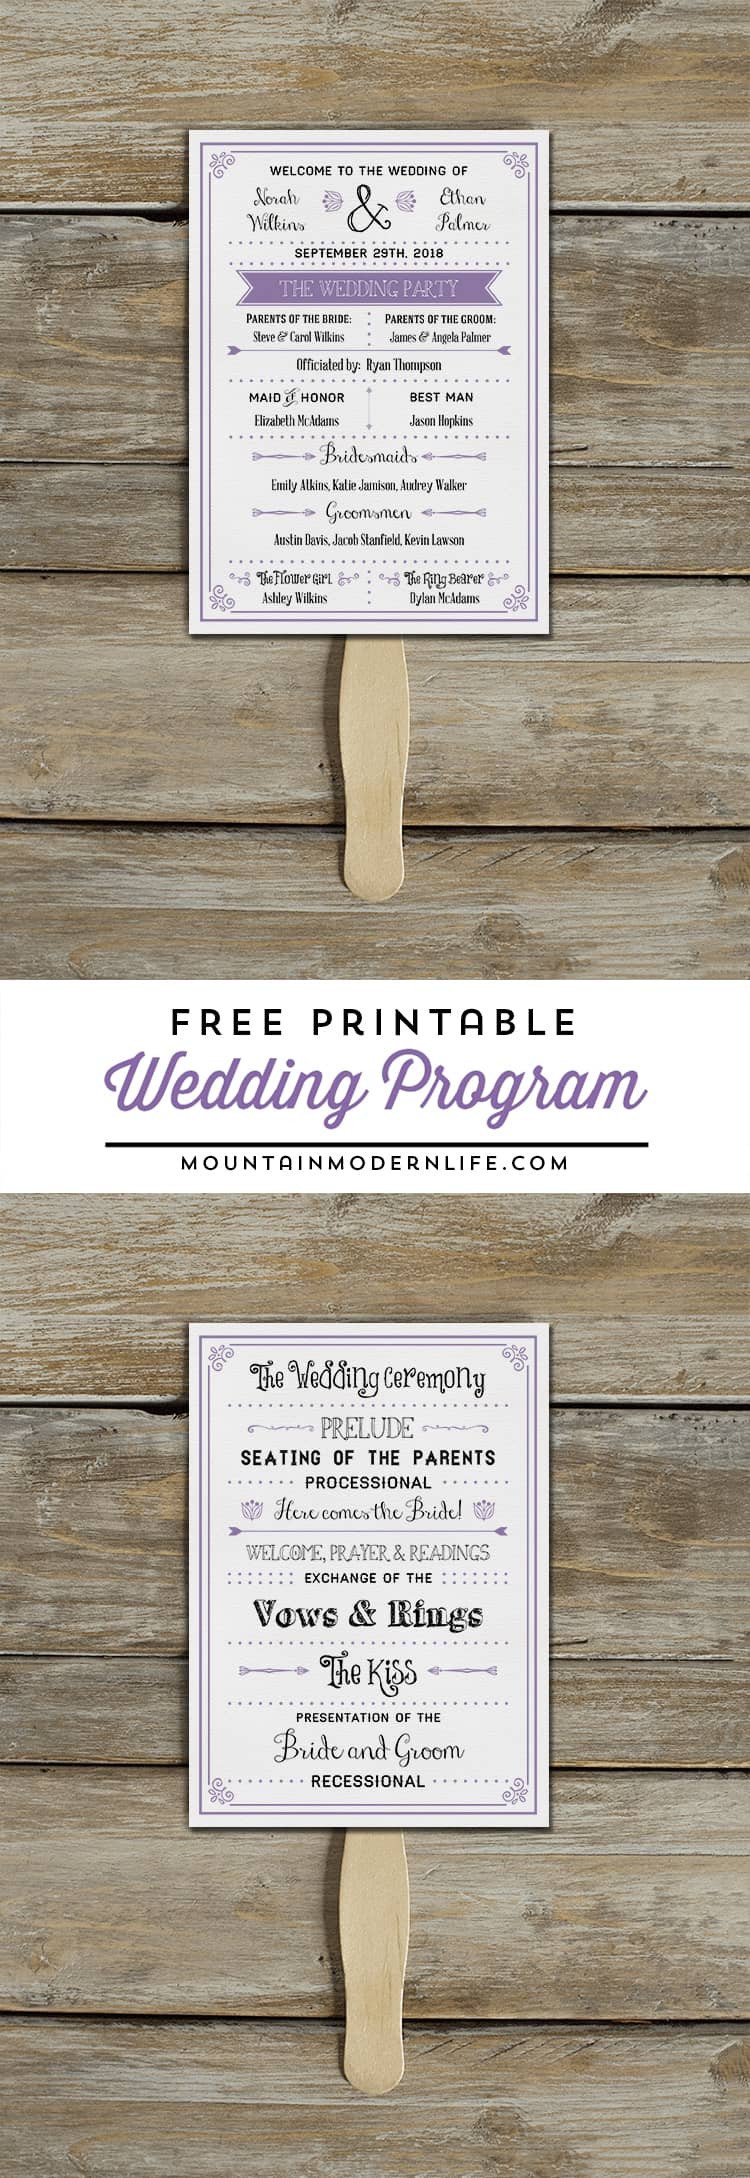 FREE Printable Wedding Program